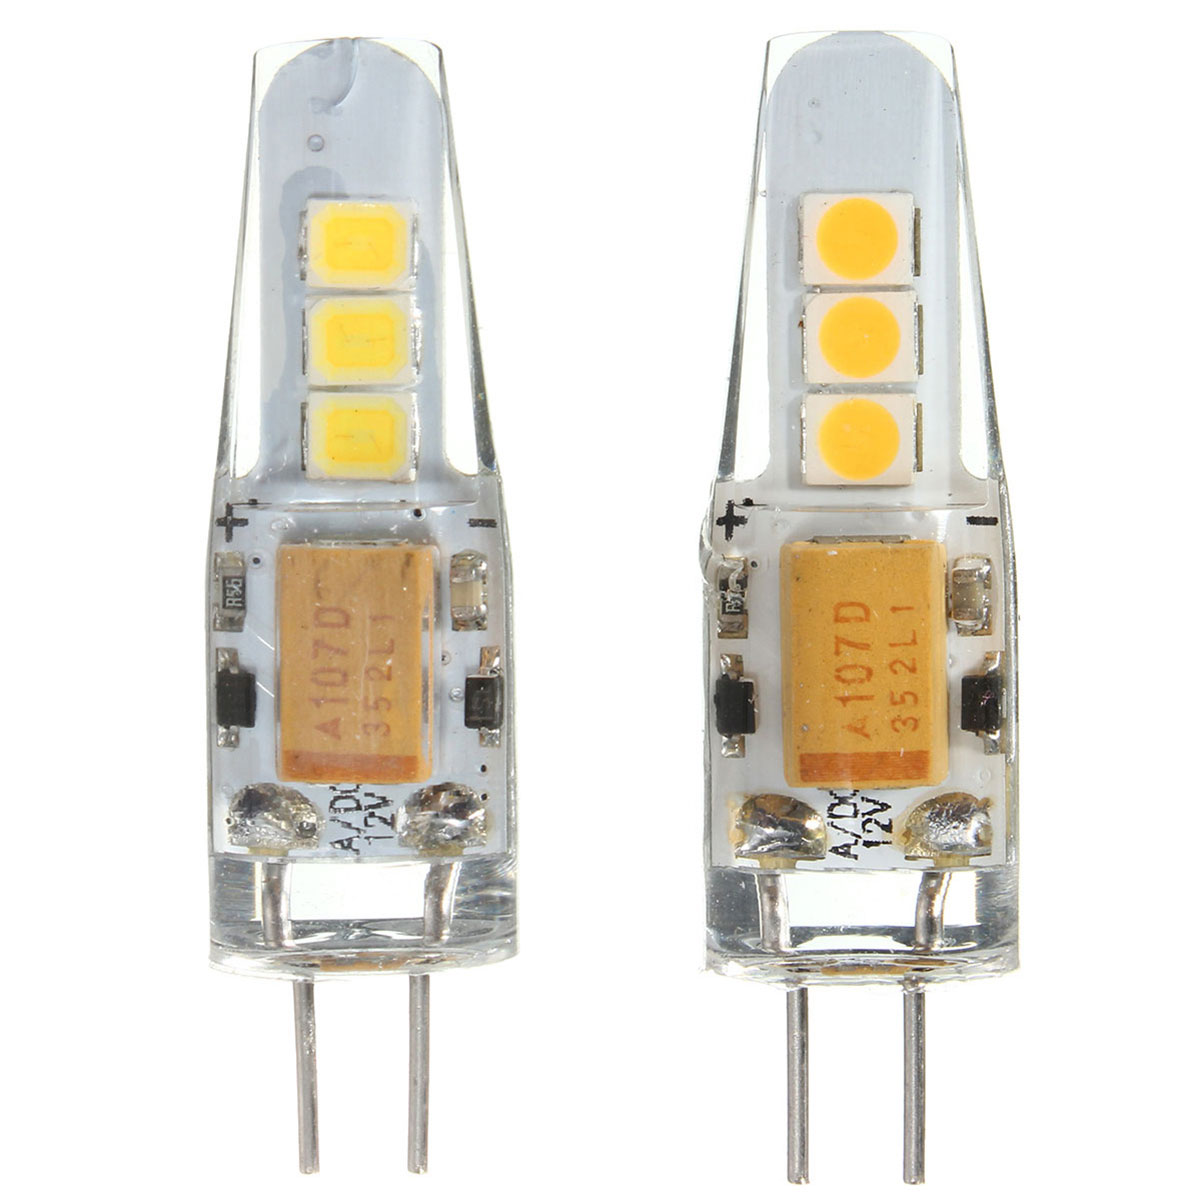 Mini-G4-LED-Corn-Bulb-2W-6-SMD-2835-Silicone-Crystal-Lamp-Light-DC12V-1065960-6